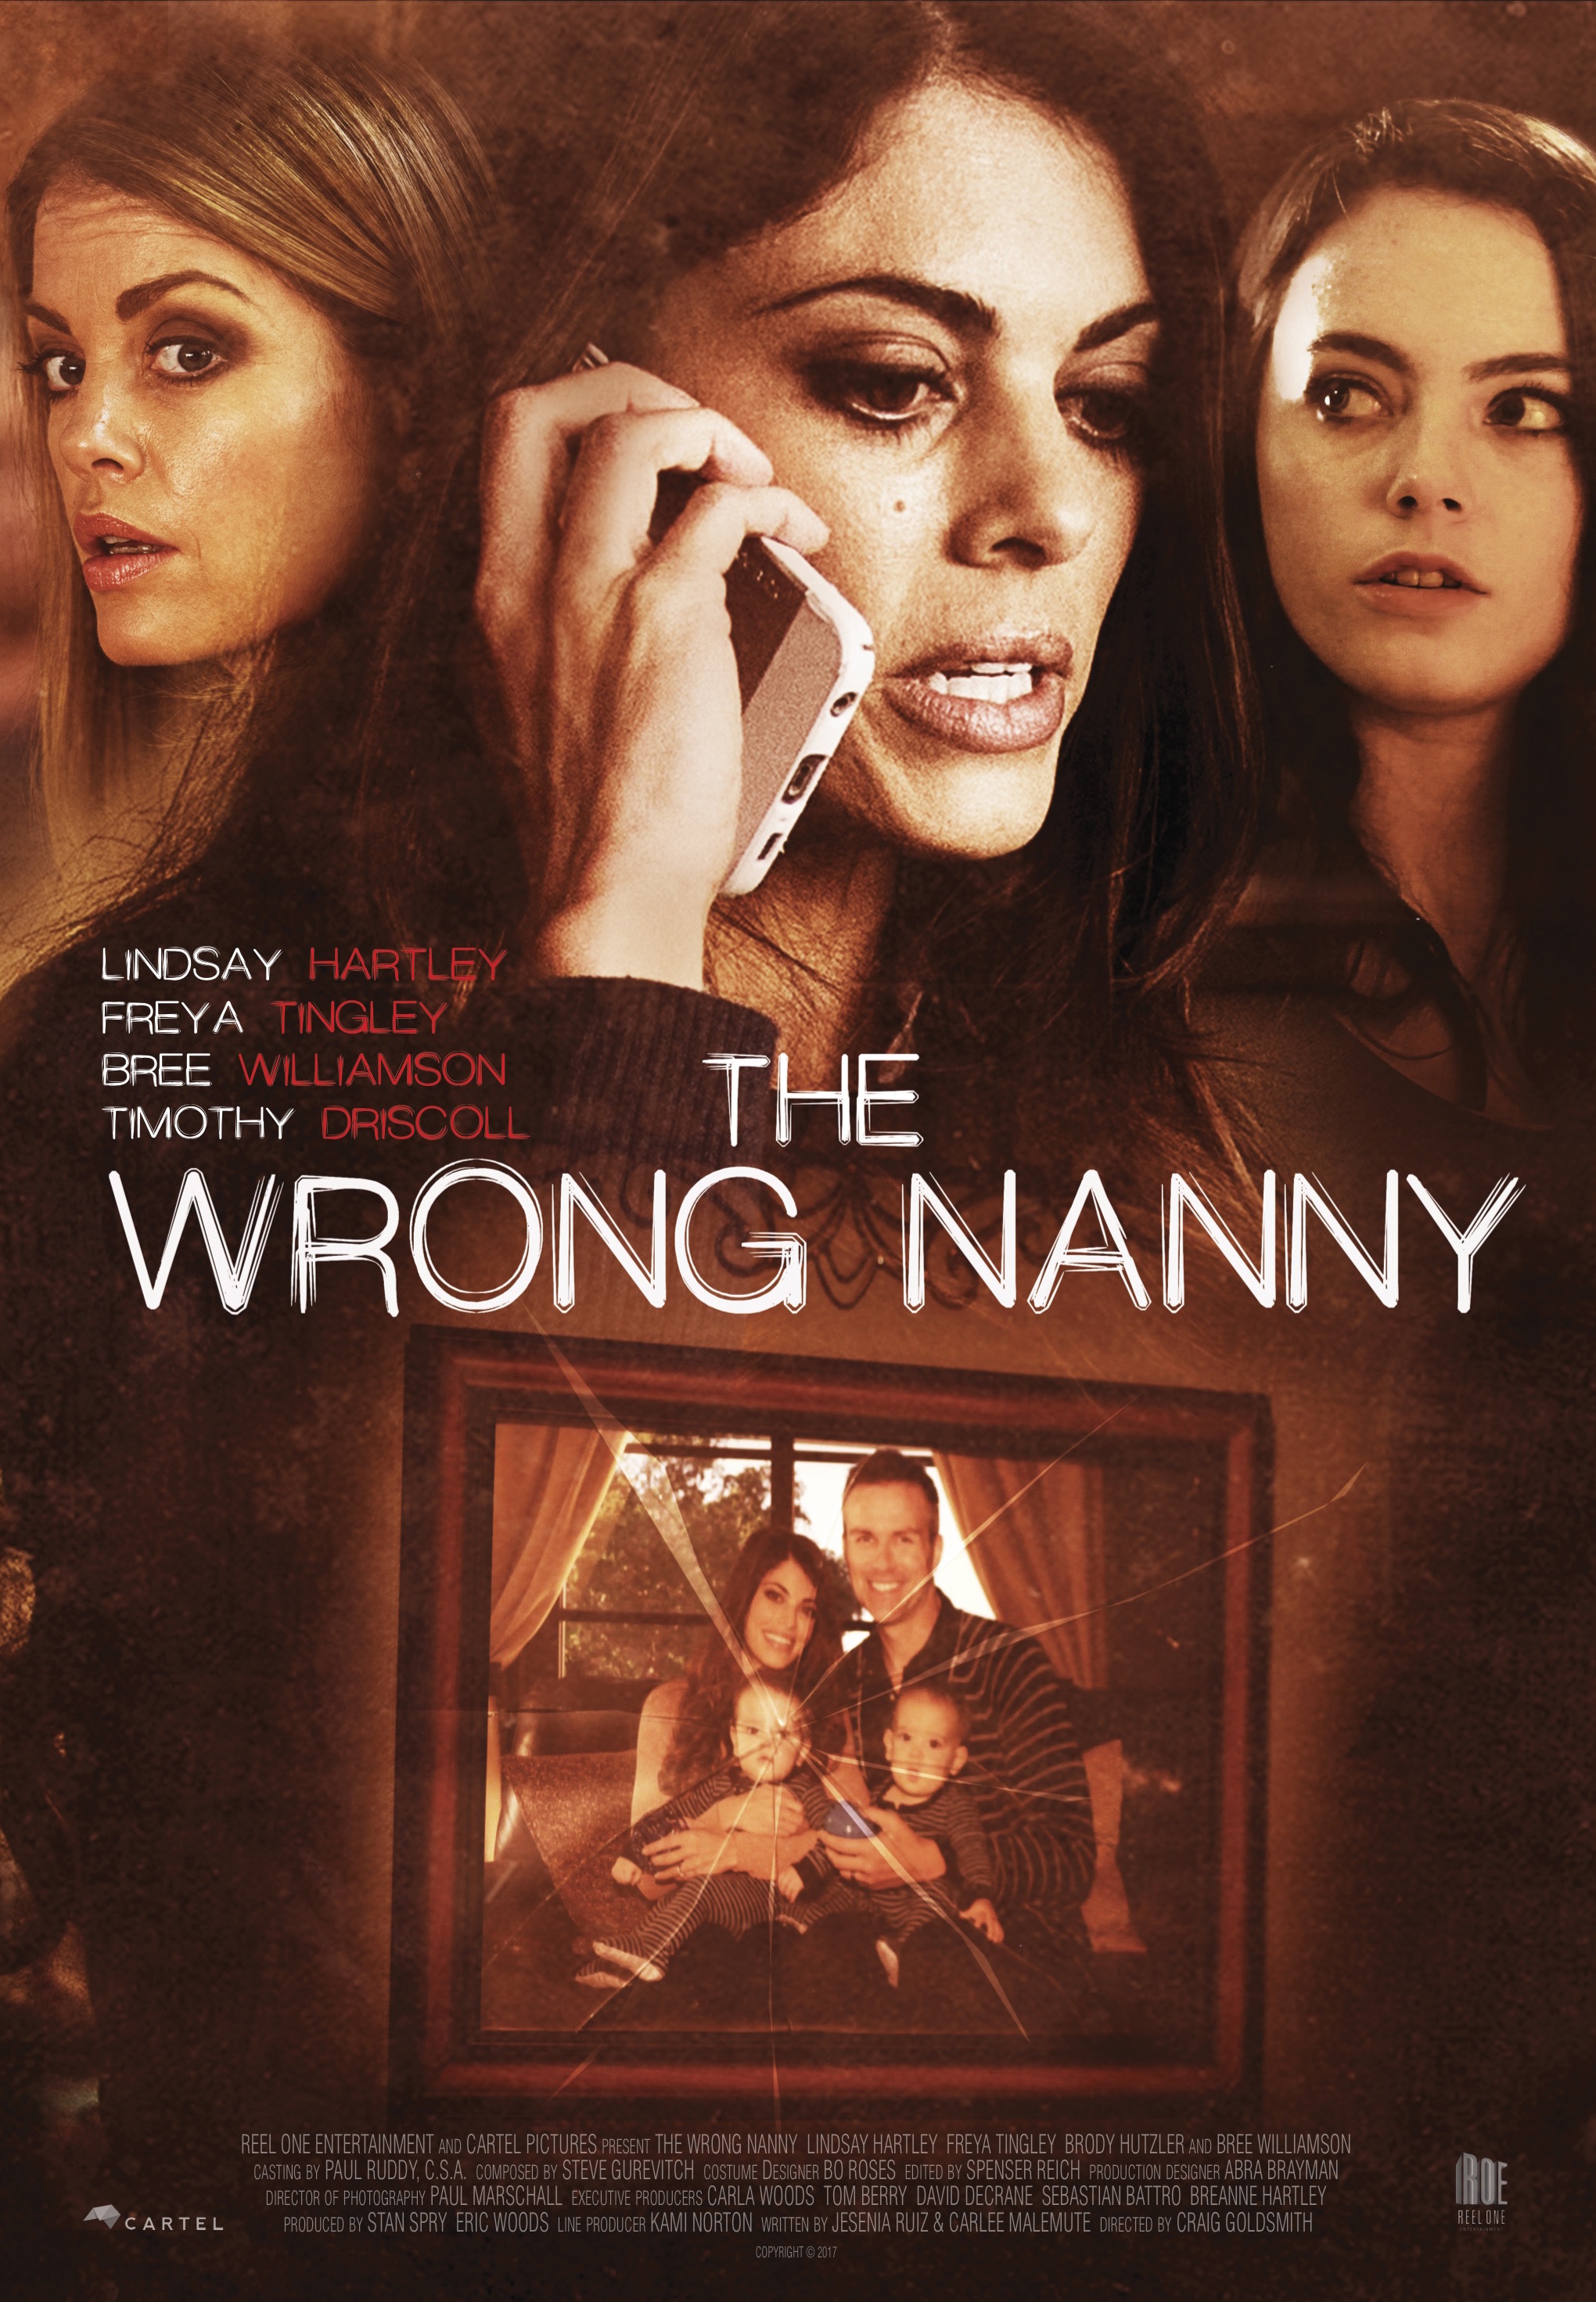 Nonton film The Wrong Nanny layarkaca21 indoxx1 ganool online streaming terbaru